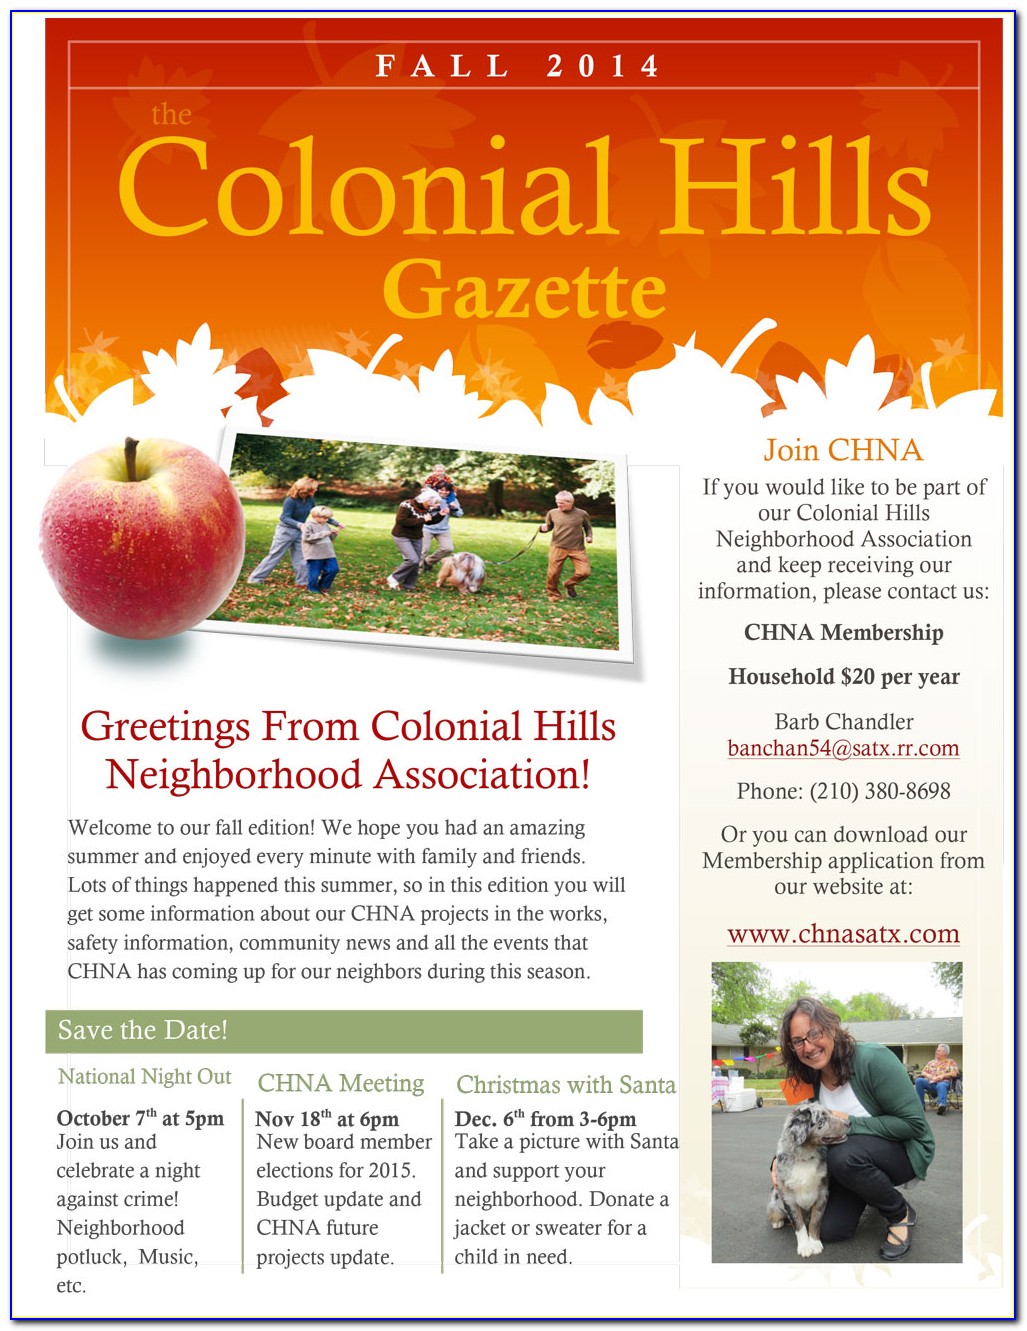 Neighborhood Newsletter Templates Free